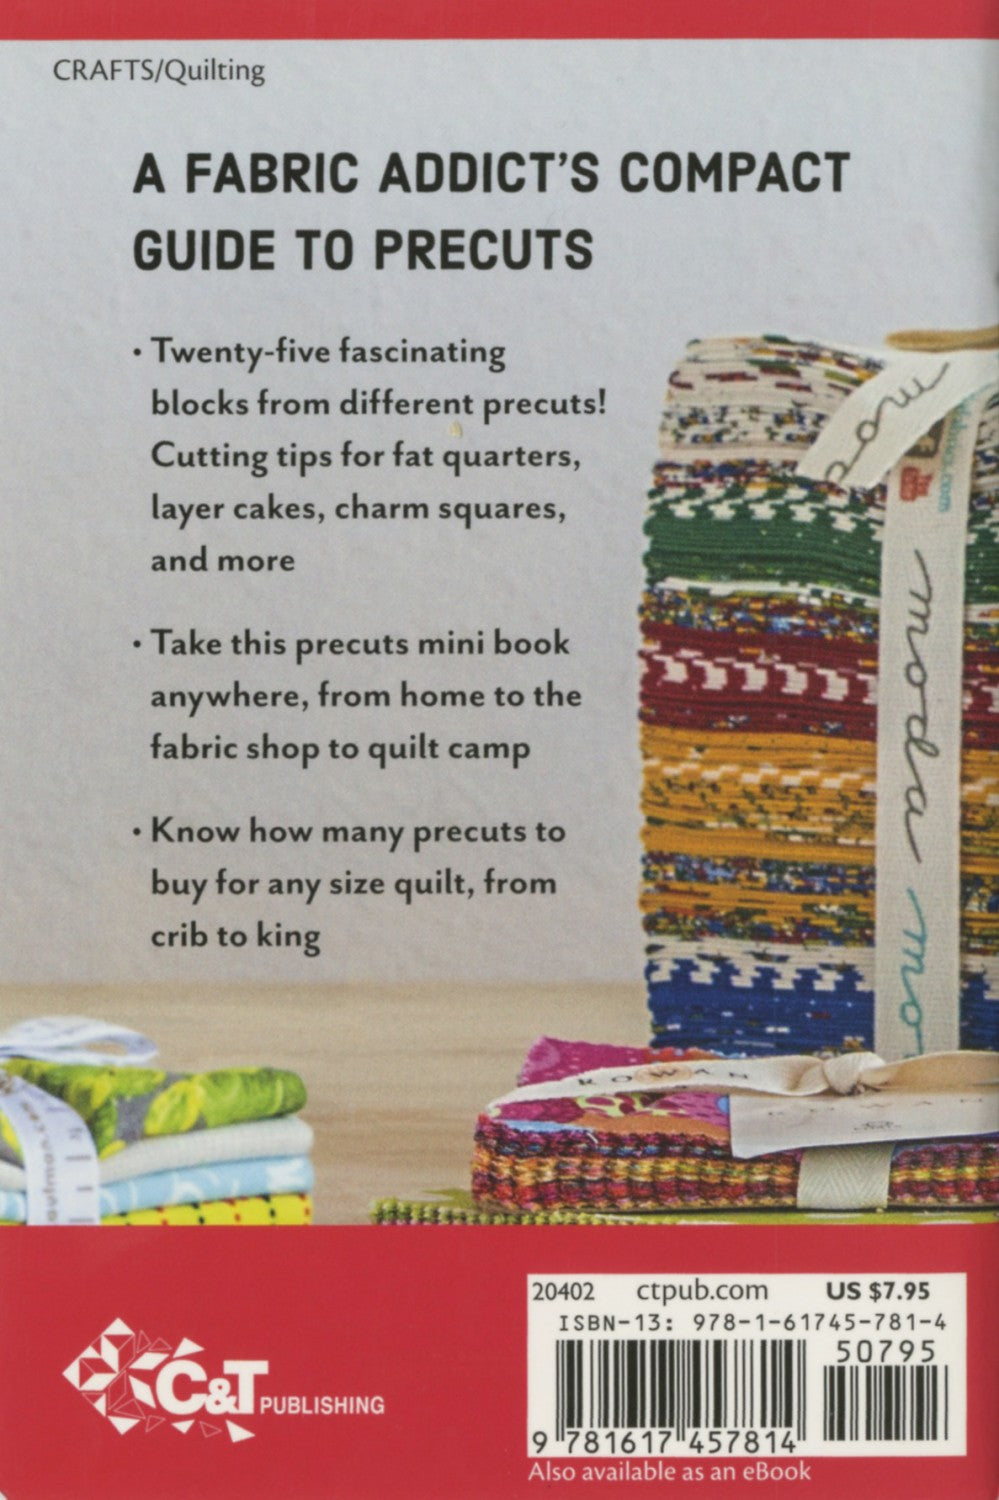 Quilting - Books, Little Shop of Fabrics